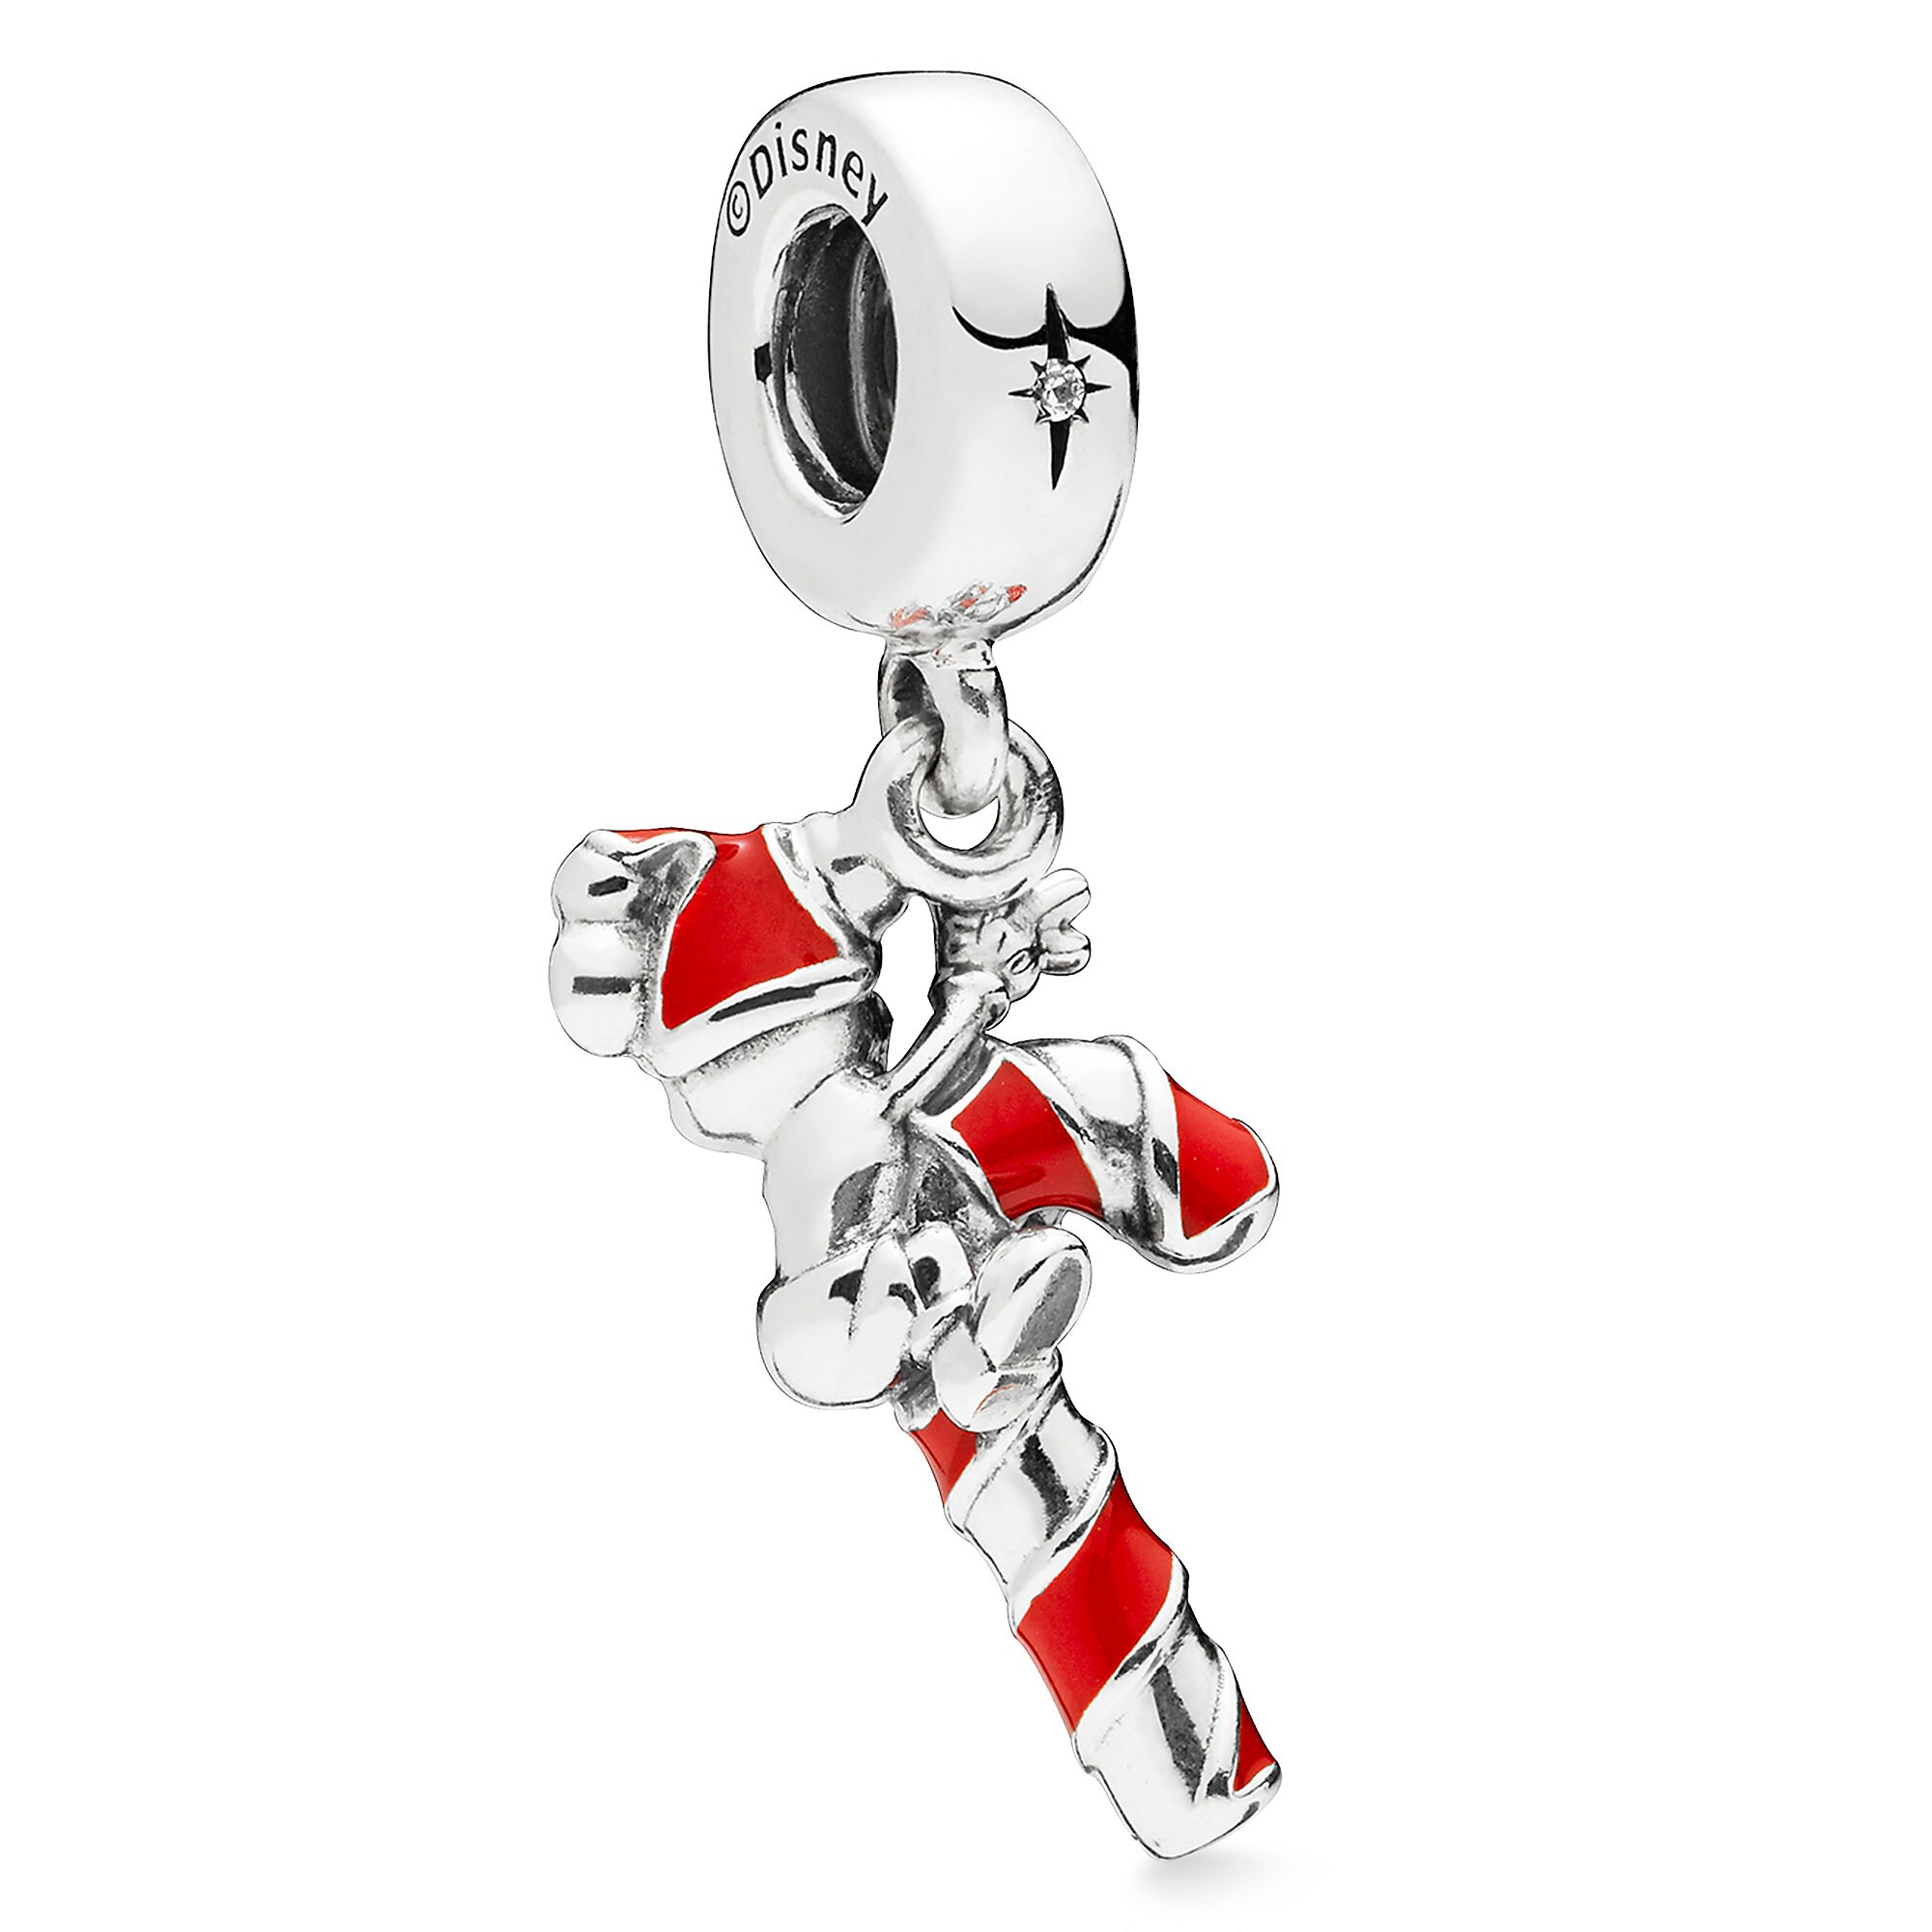 Santa Mickey Mouse Charm by Pandora Jewelry